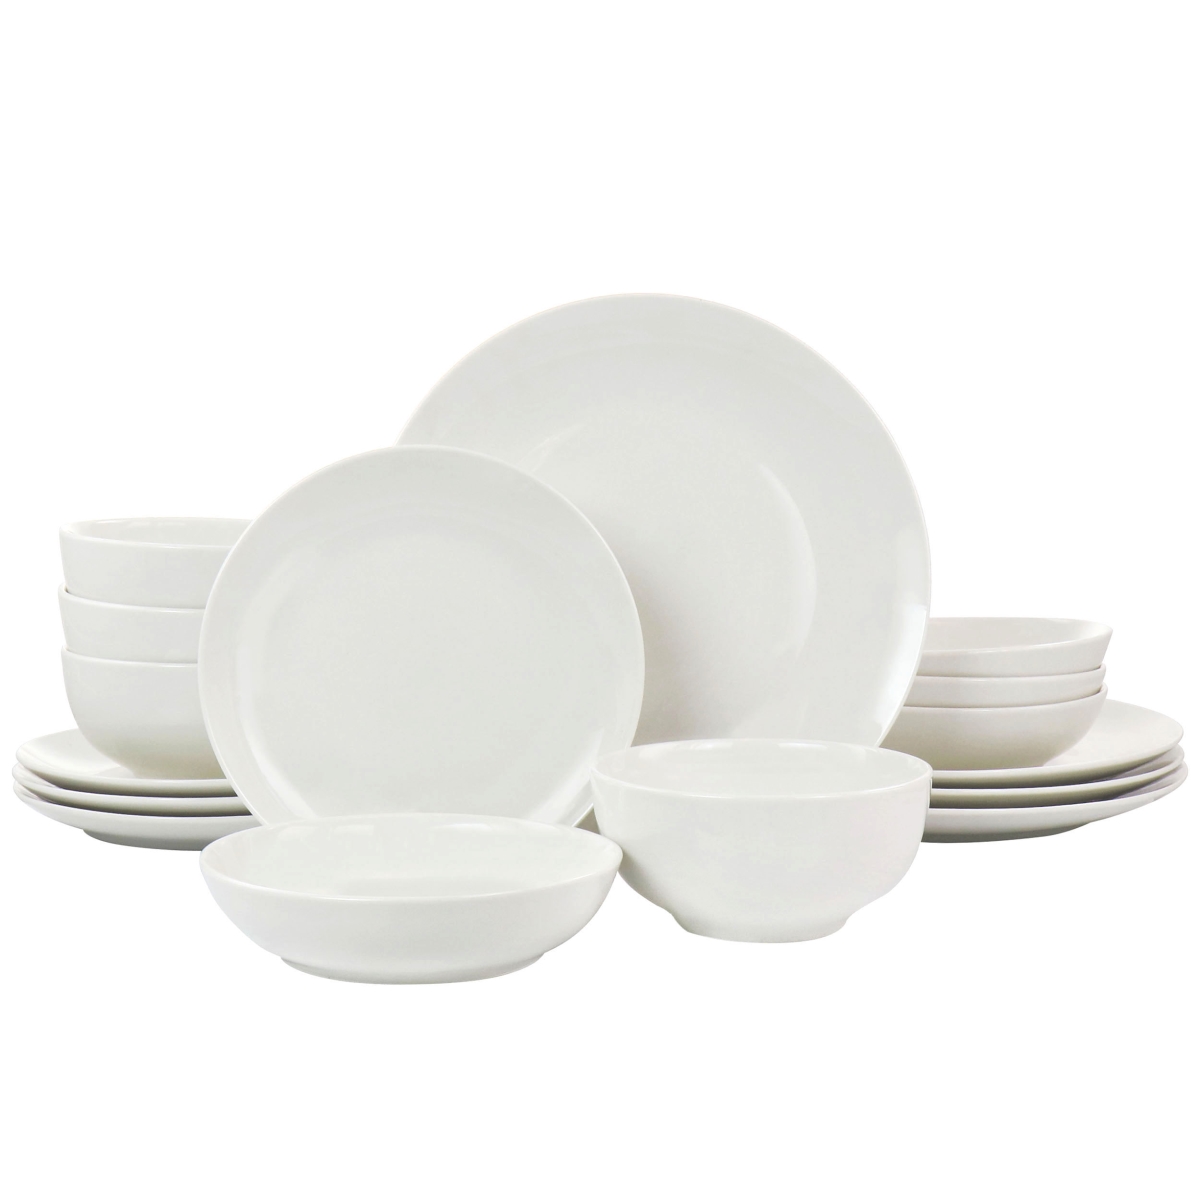 Picture of Elama EL-CAMELLIA Porcelain Double Bowl Dinnerware Set, Camellia - 16 Piece